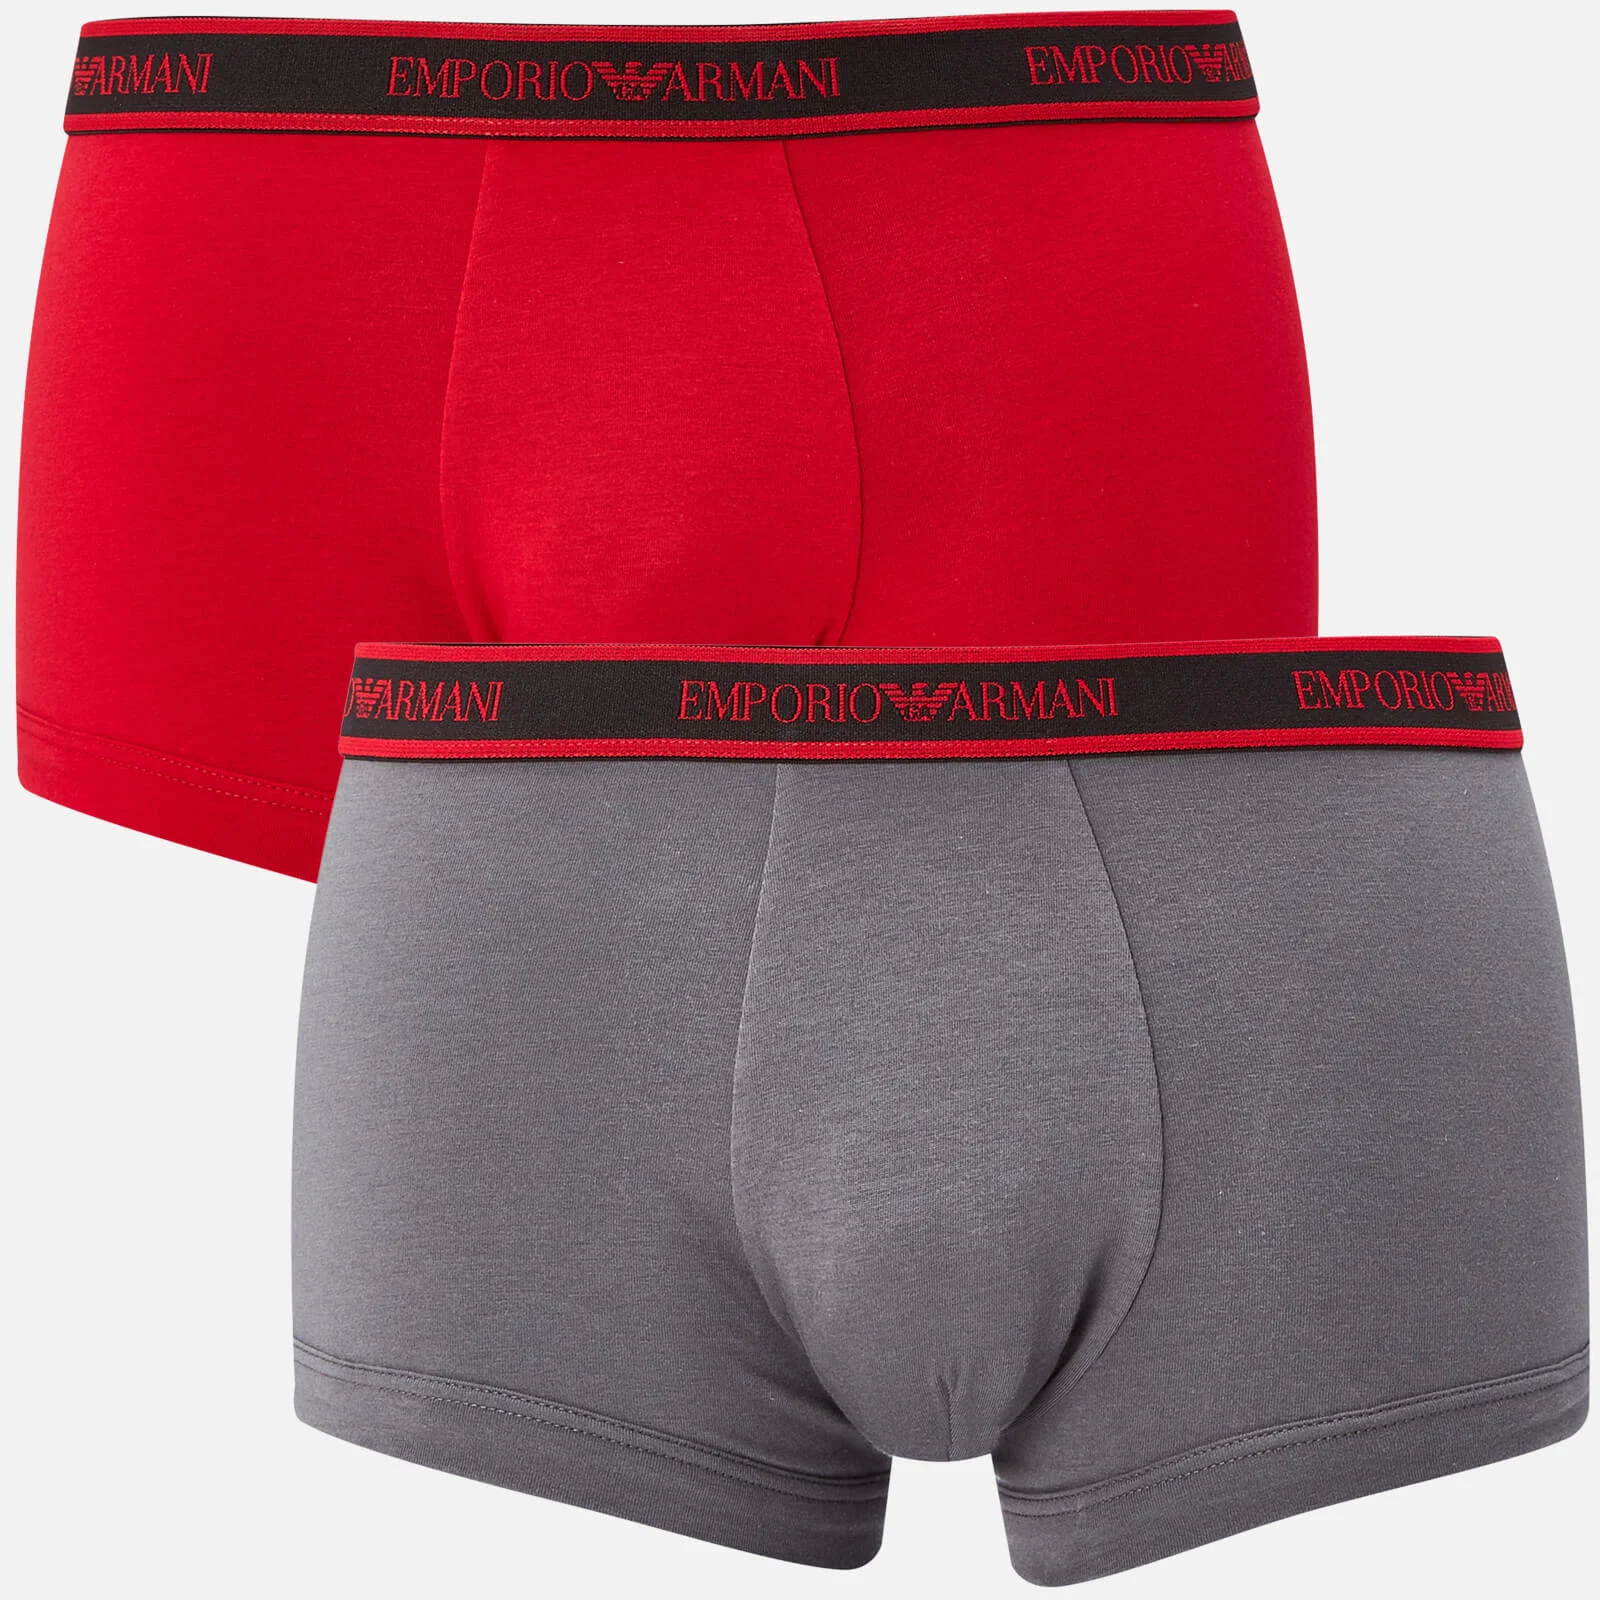 Emporio Armani Men's 3 Pack Boxers - Red/Black Image 1